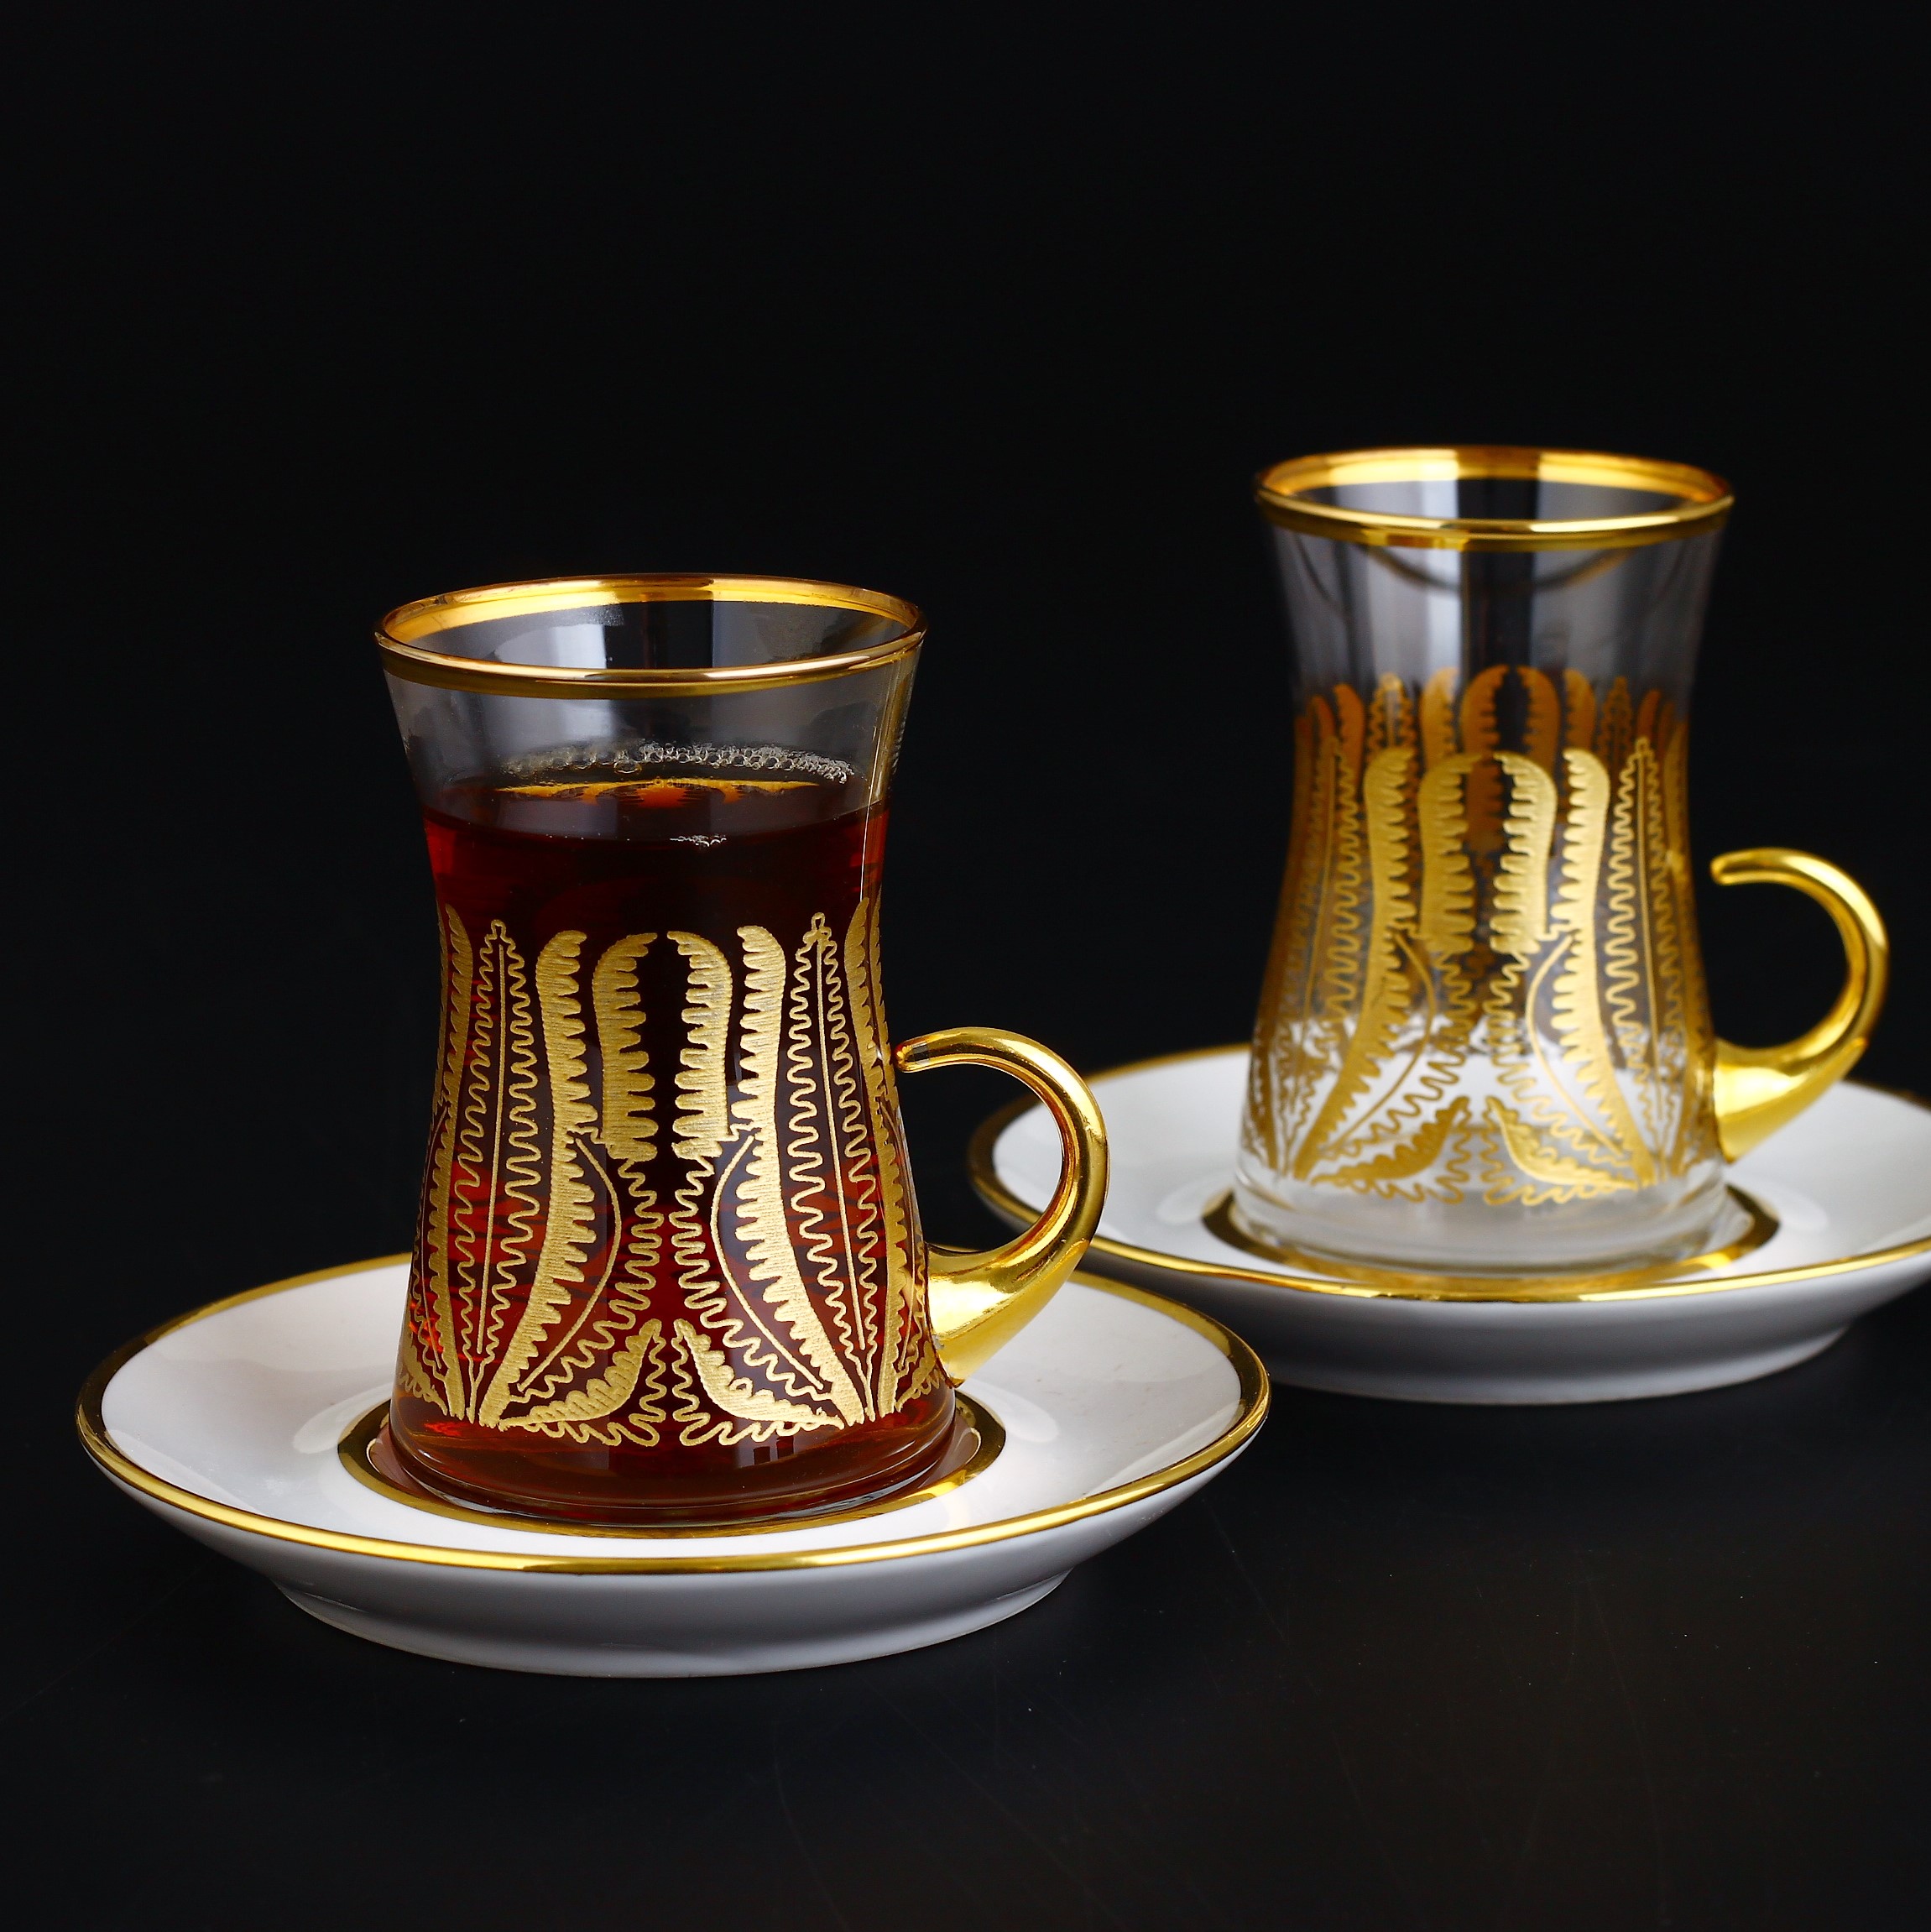 https://traditionalturk.com/wp-content/uploads/2020/04/12-pcs-demre-gold-turkish-tea-set-with-porcelain-saucers-1.jpg